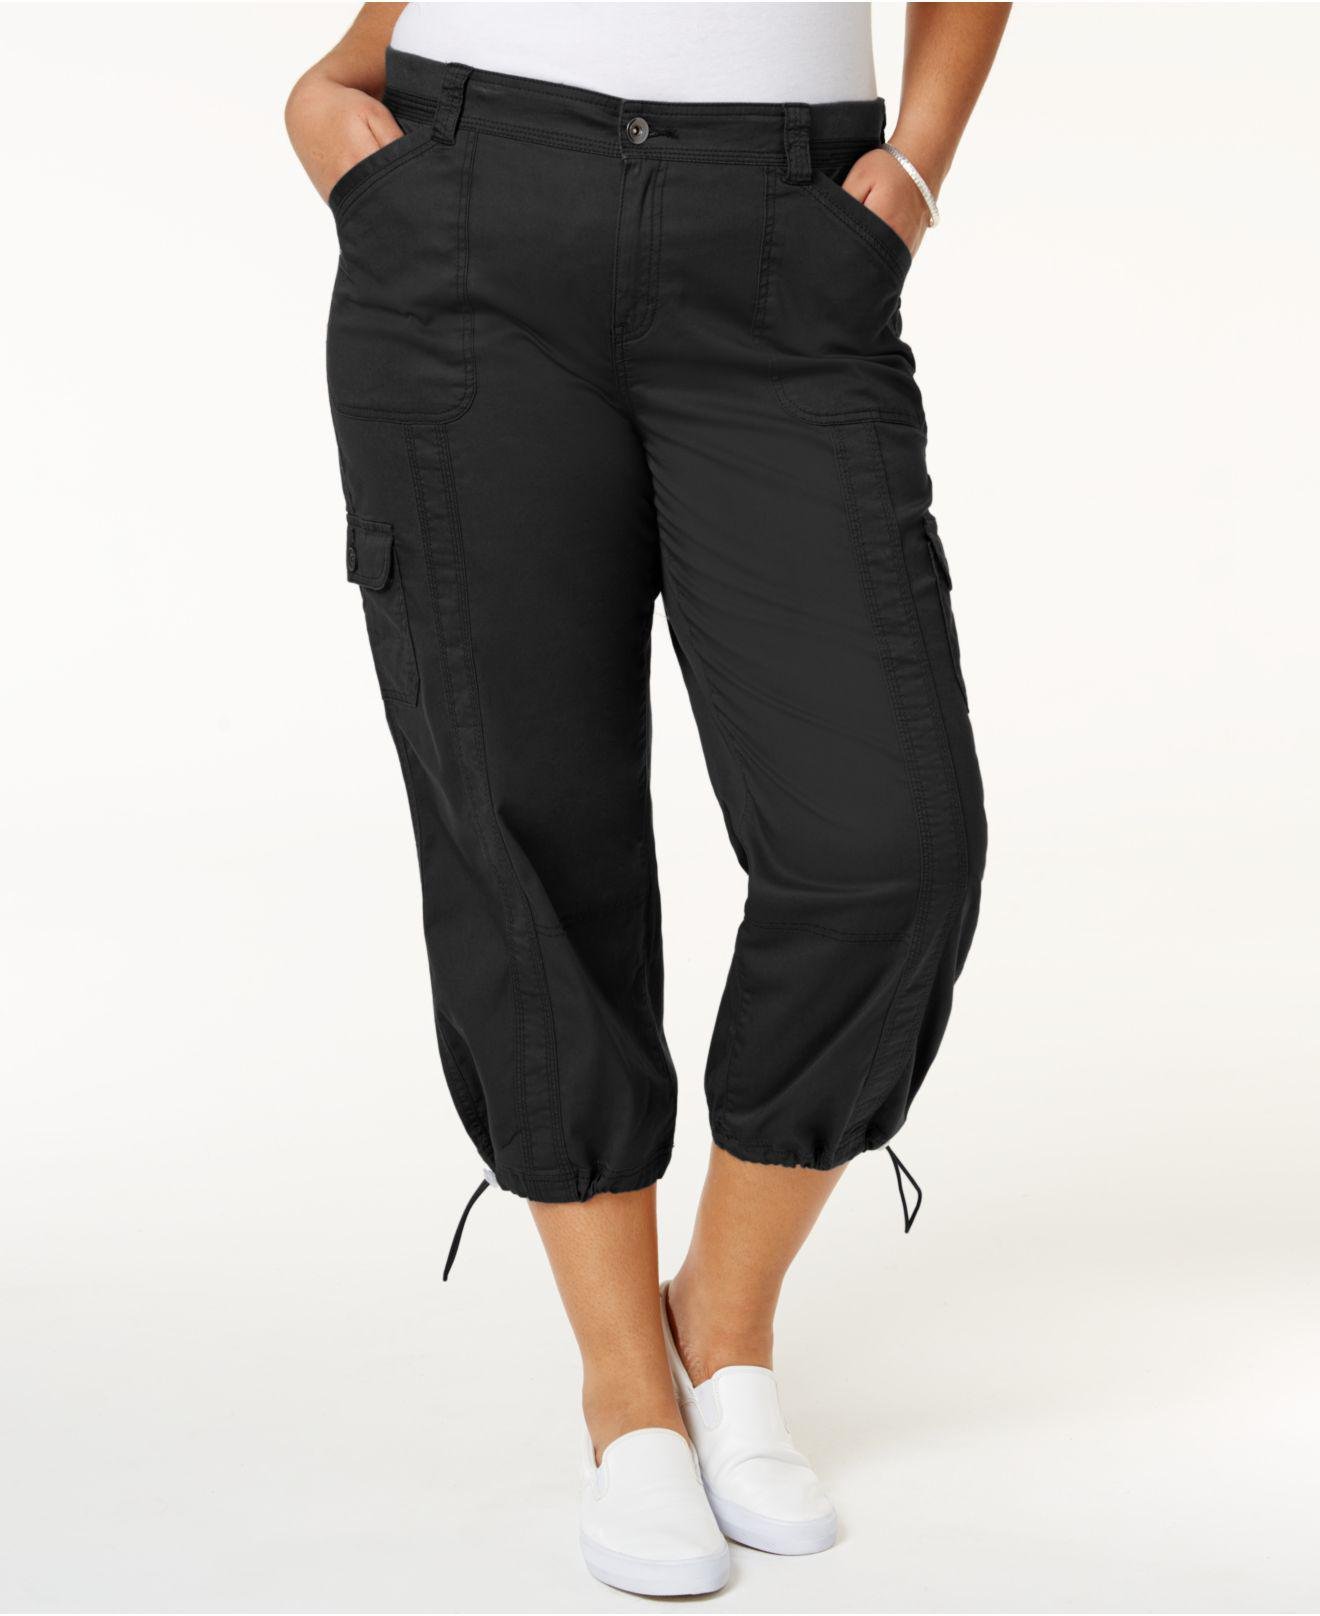 Style & Co. Cotton Plus Size Capri Cargo Pants in Deep Black (Black) - Lyst